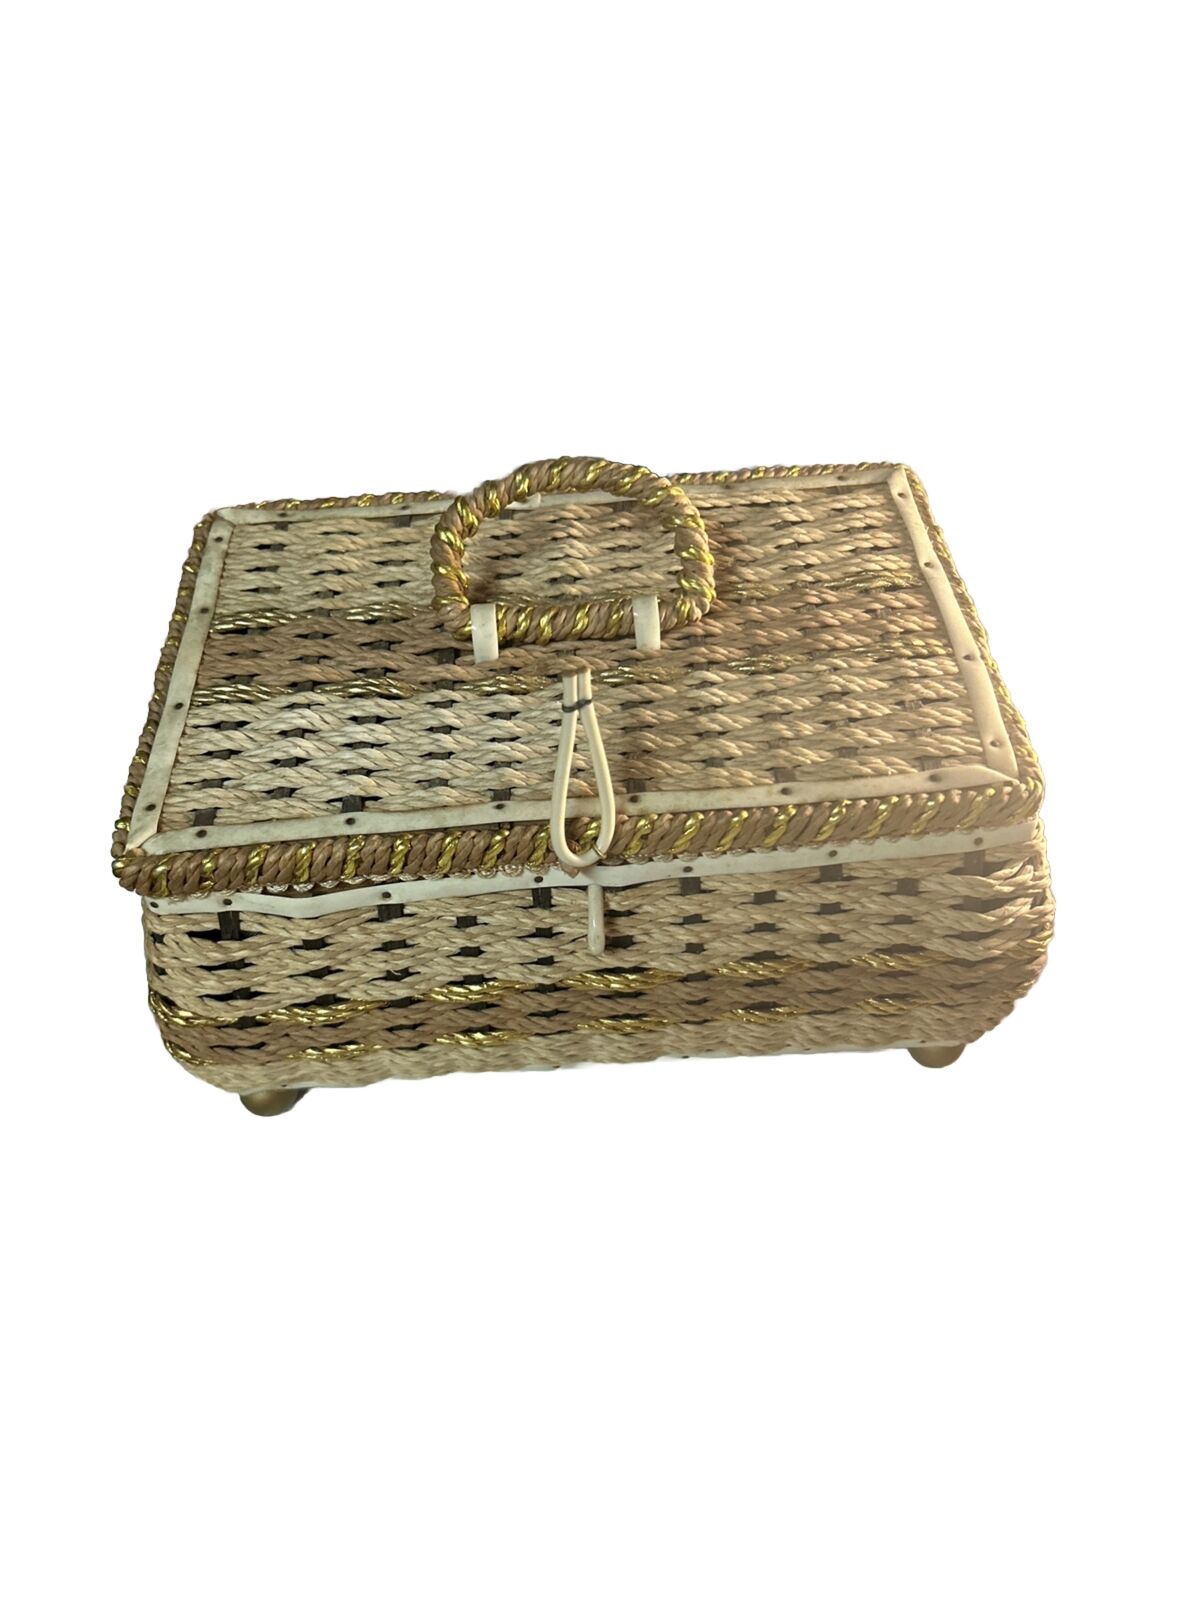 Vtg 60s Sewing Box Basket Woven reed Ball Feet Cream Brown Gold 9x6x5”